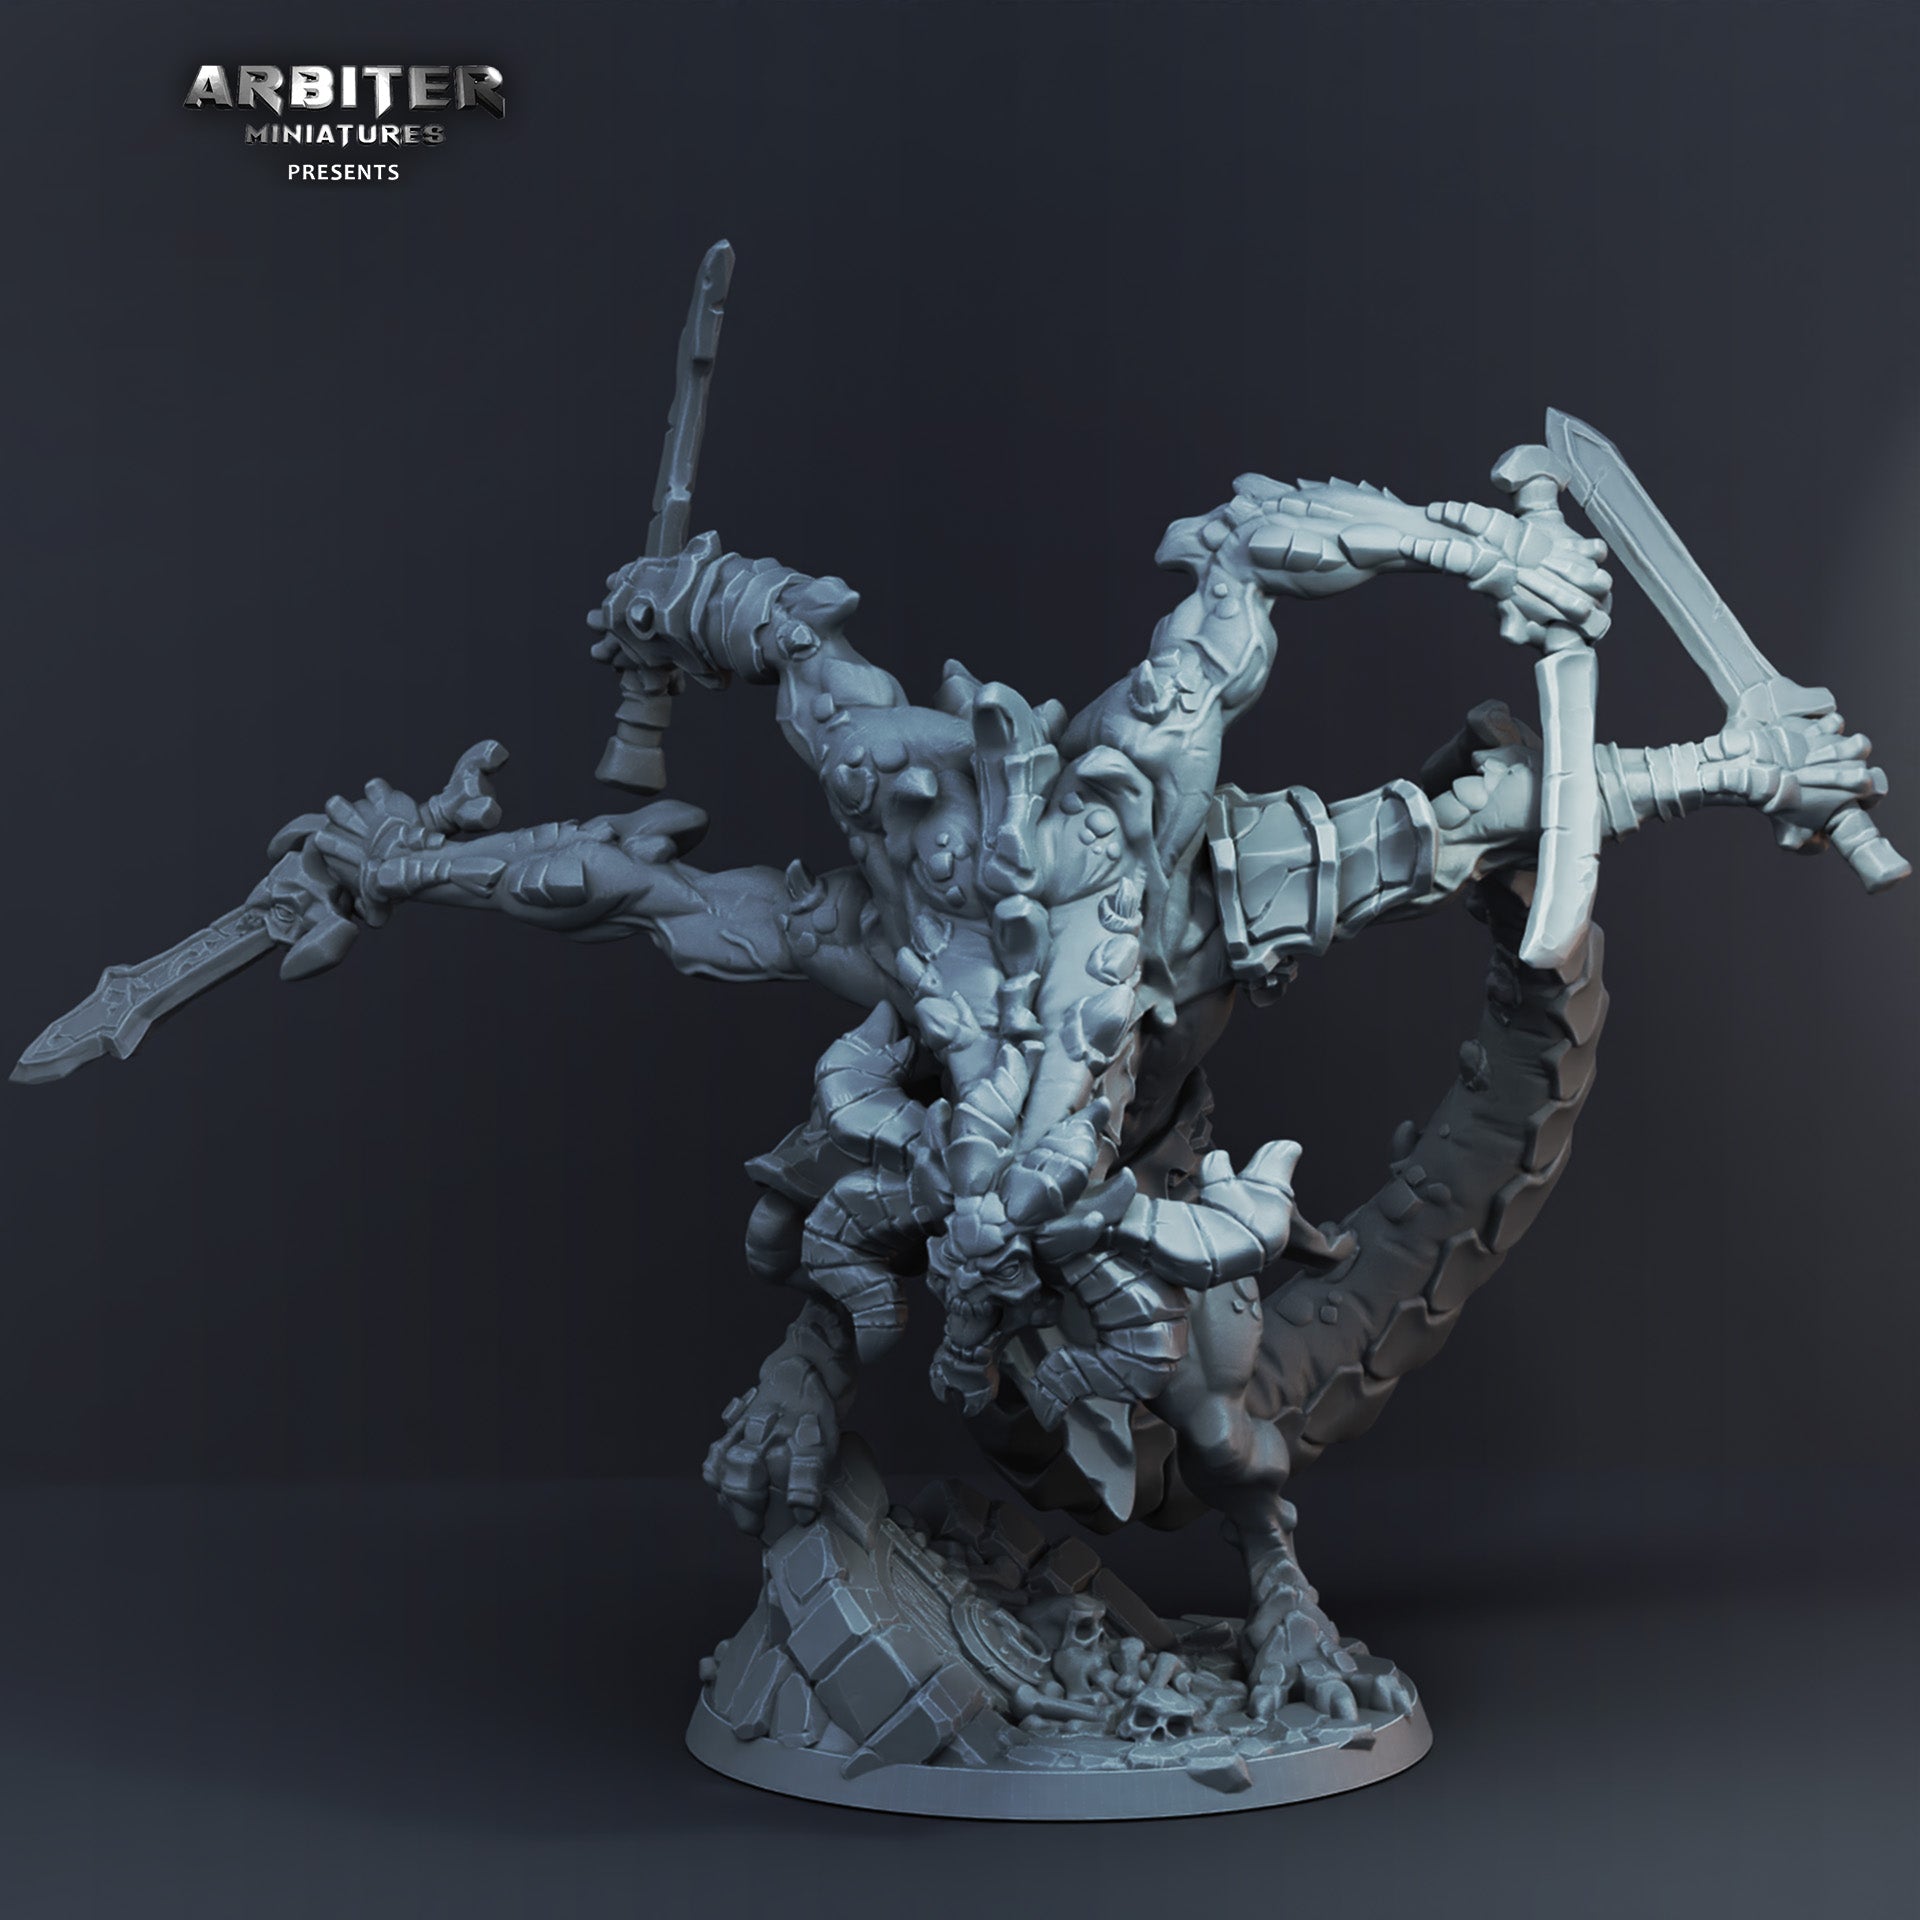 Dynamic poses on Arbiter Miniatures' model